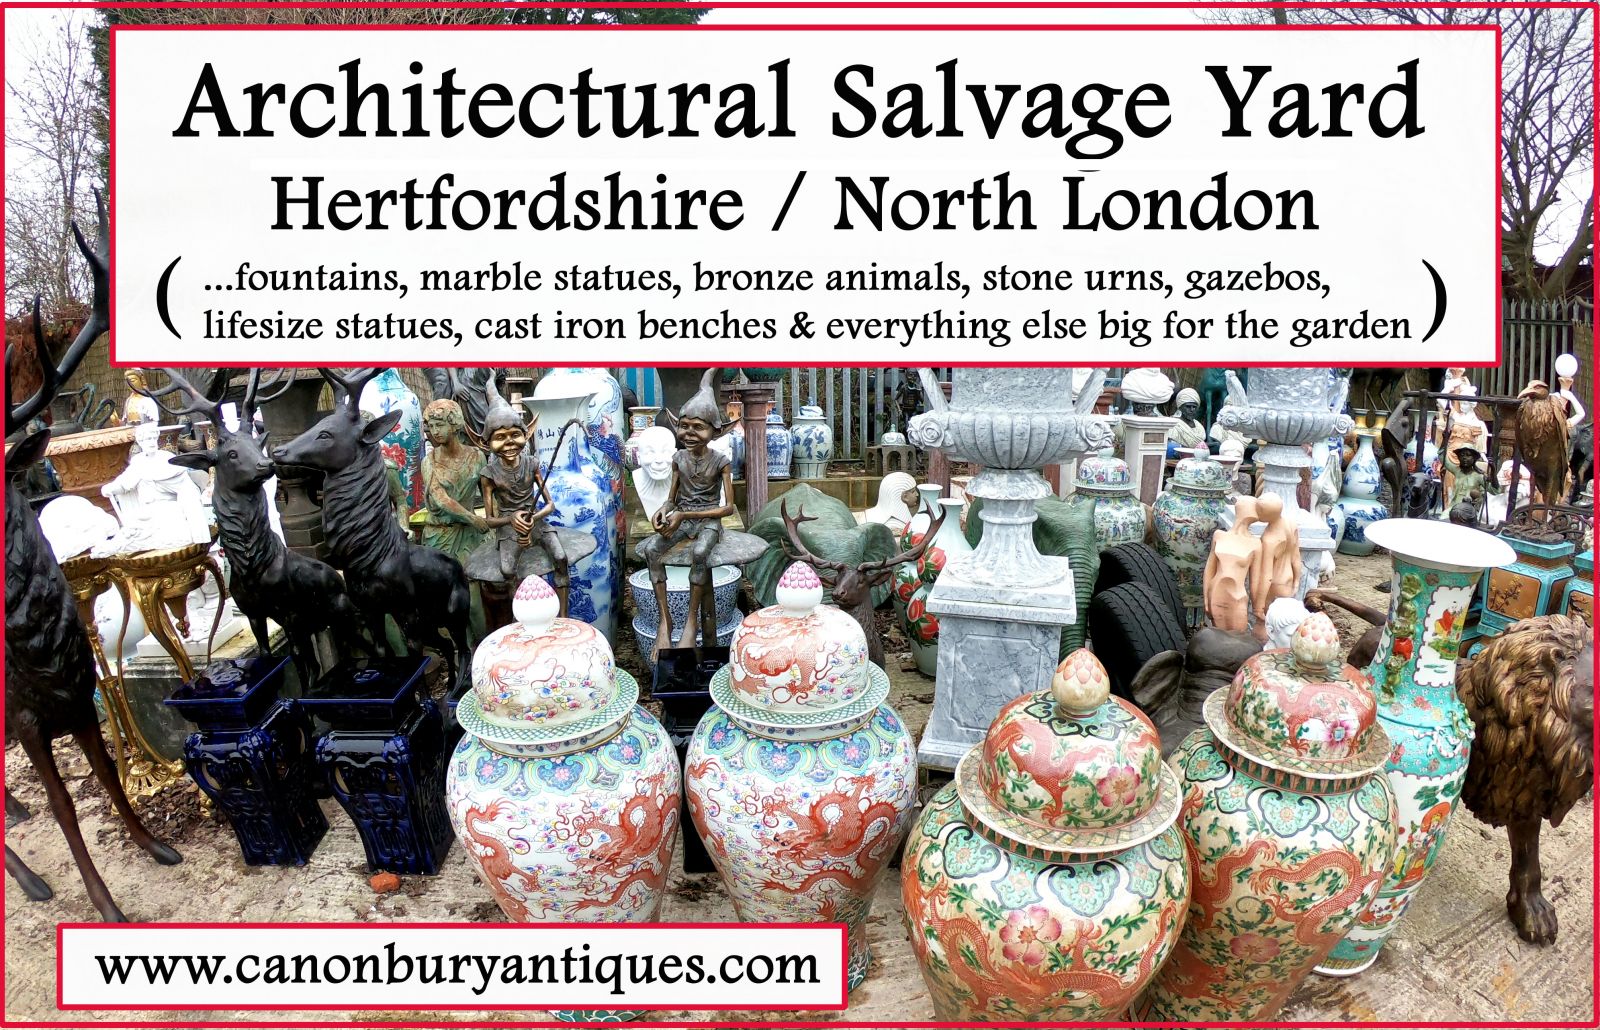 London Architectural Salvage yard